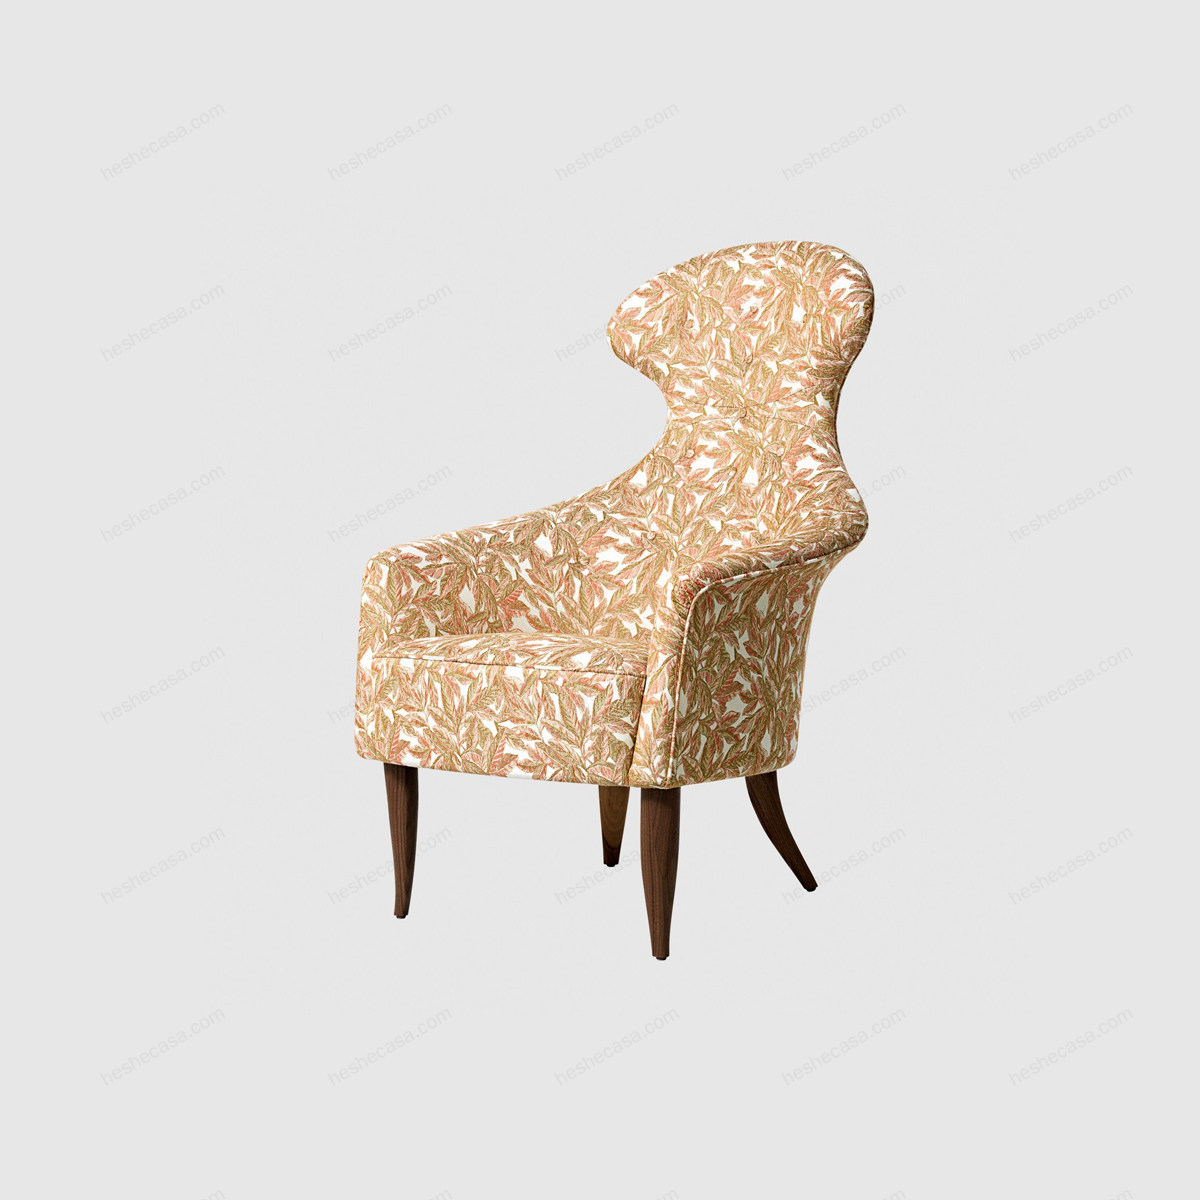 Eva Lounge Chair扶手椅